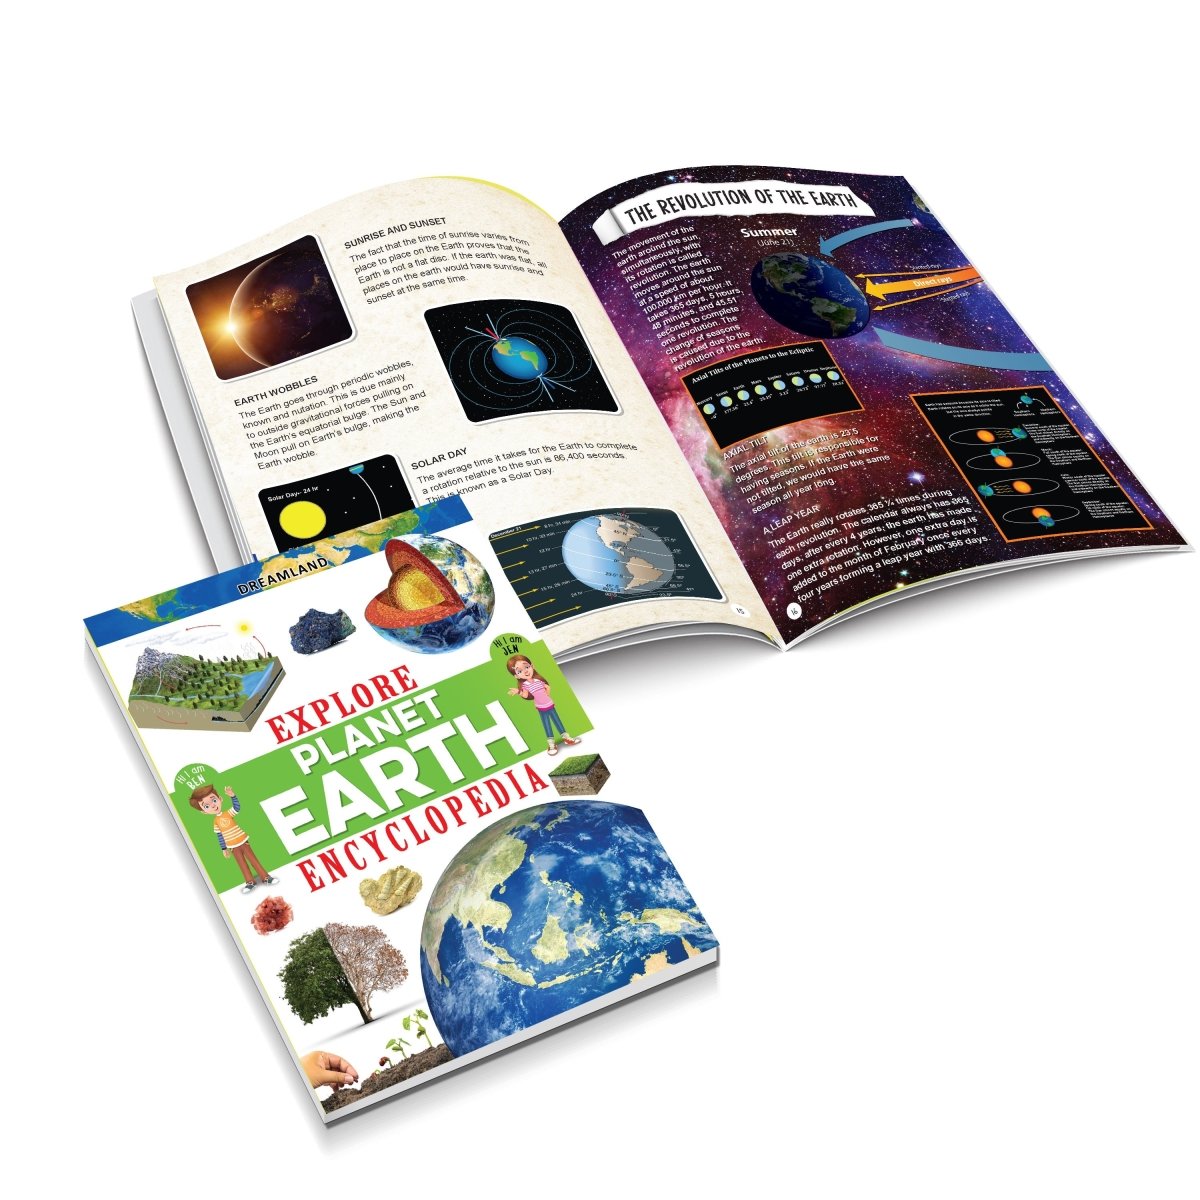 Dreamland Publications Explore Planet Earth Encyclopedia - 9789395588379